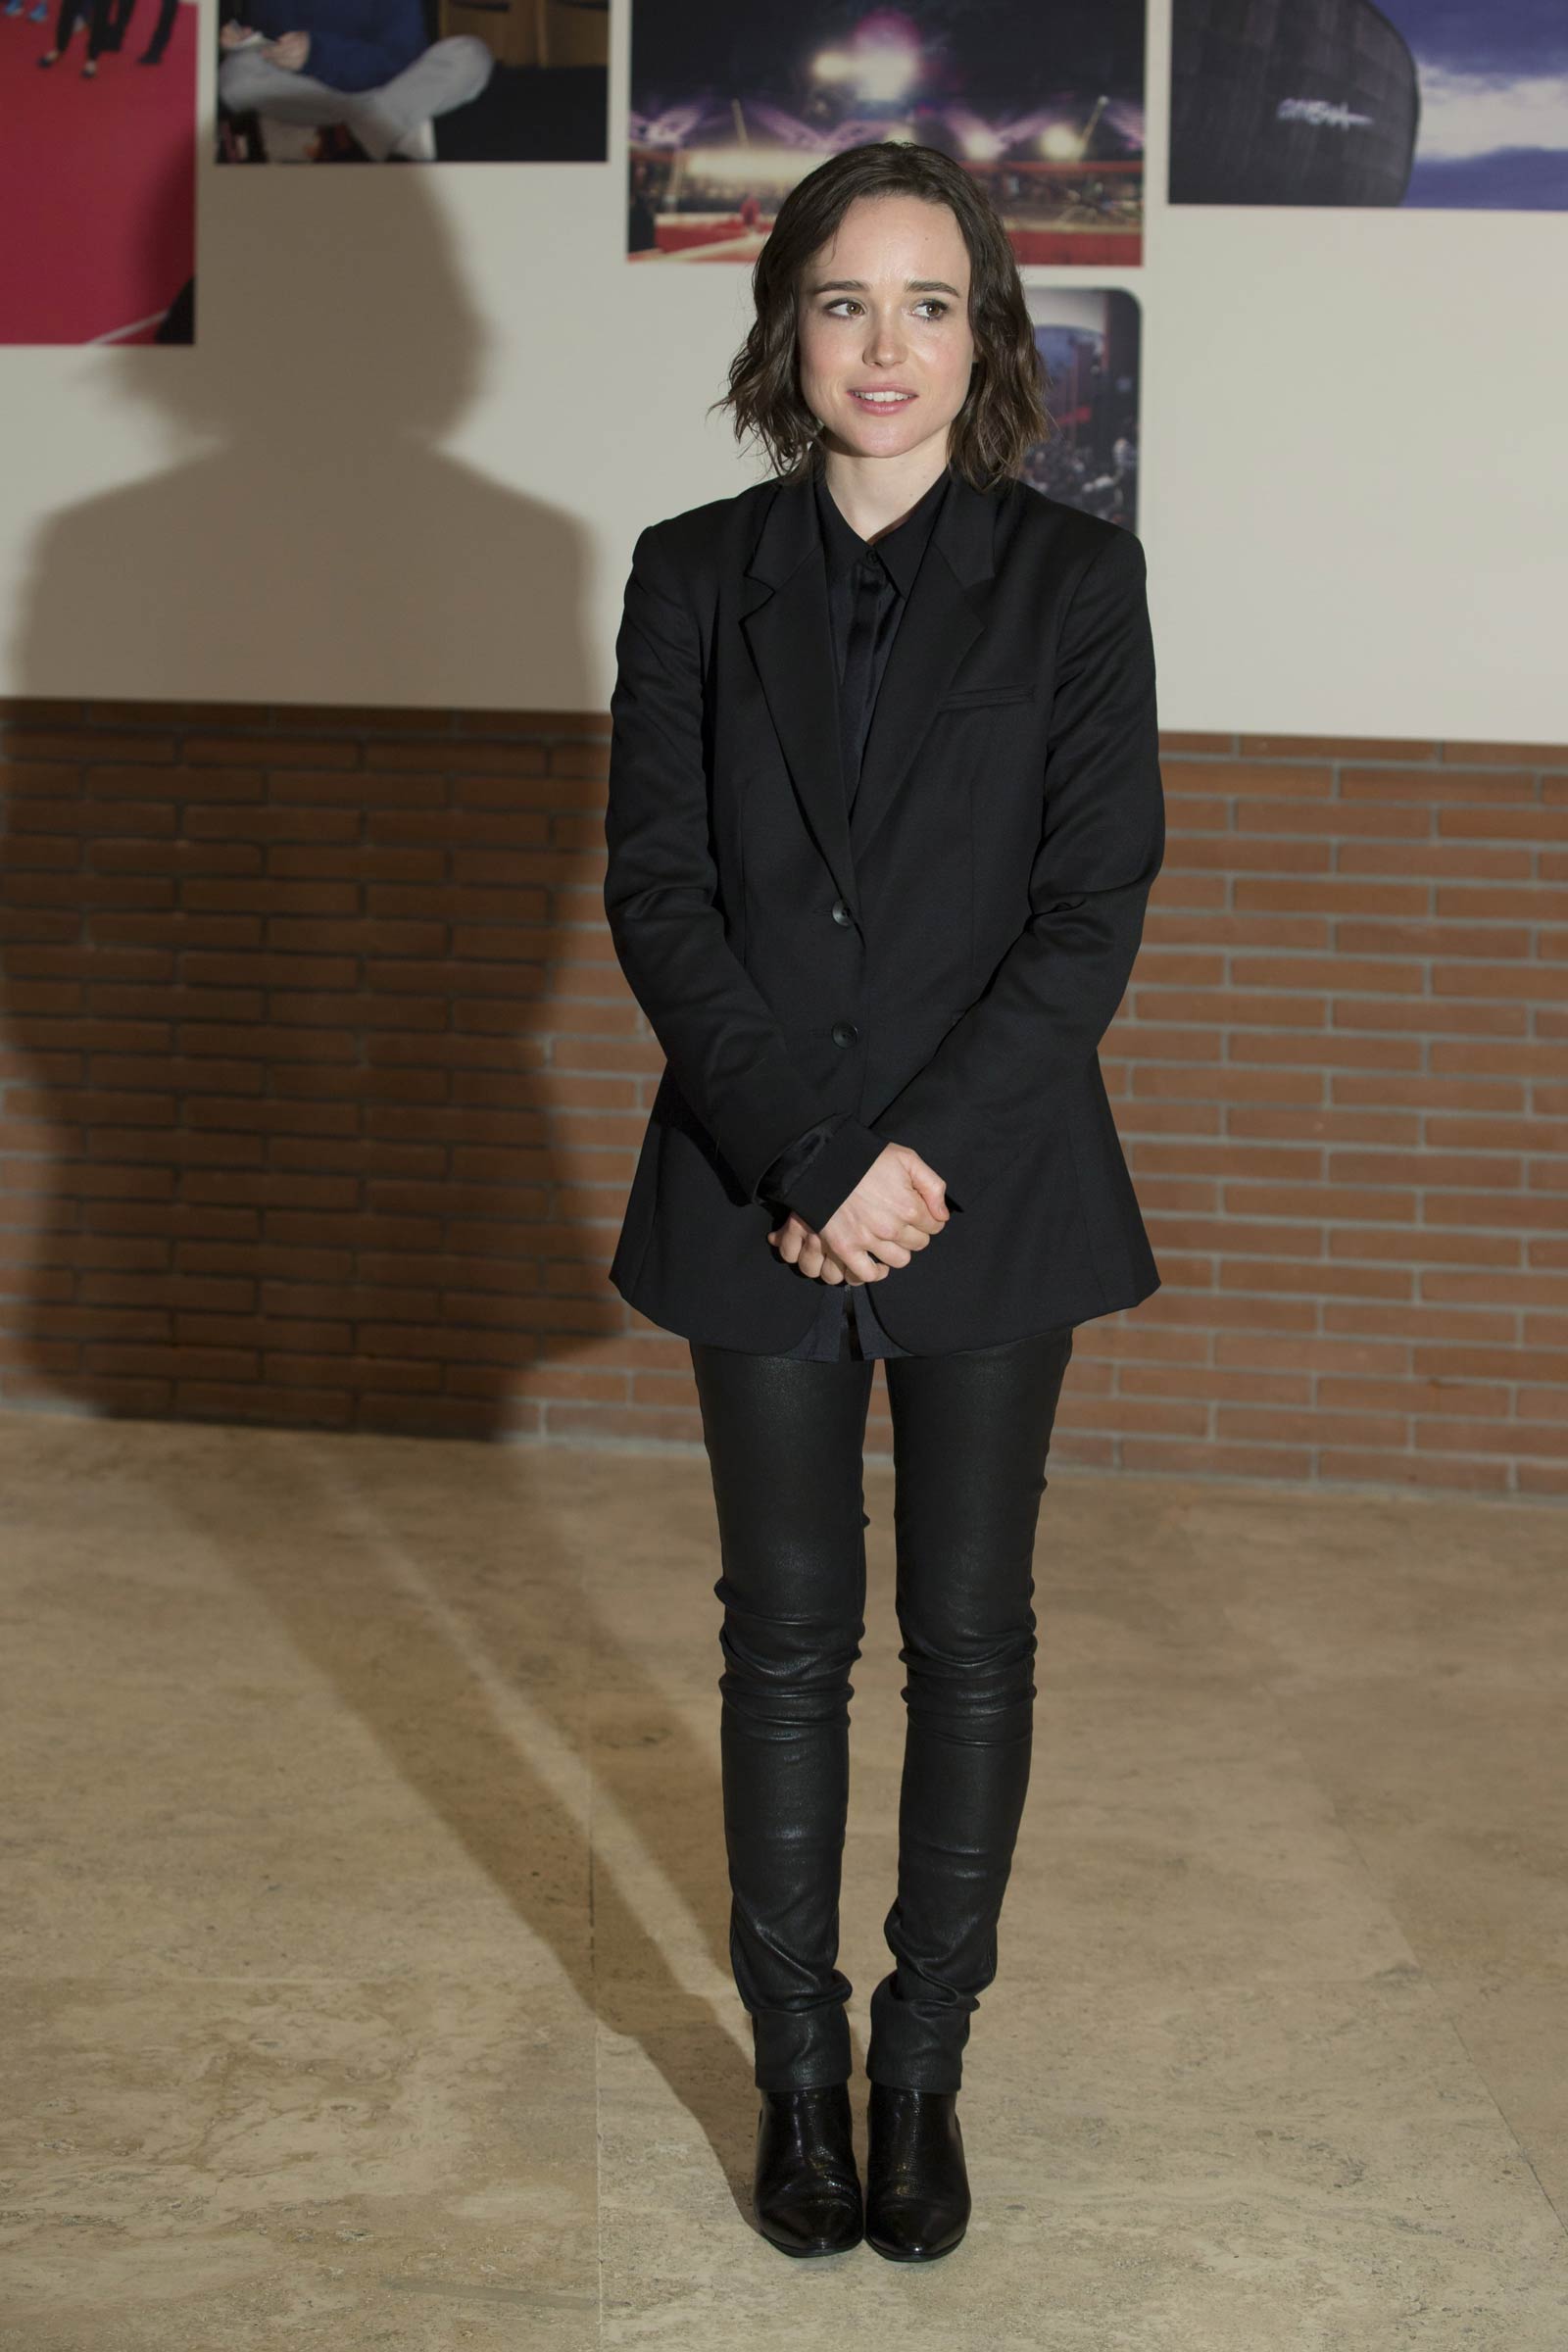 Ellen Page attends 10th Rome Film Festival Freeheld Screening